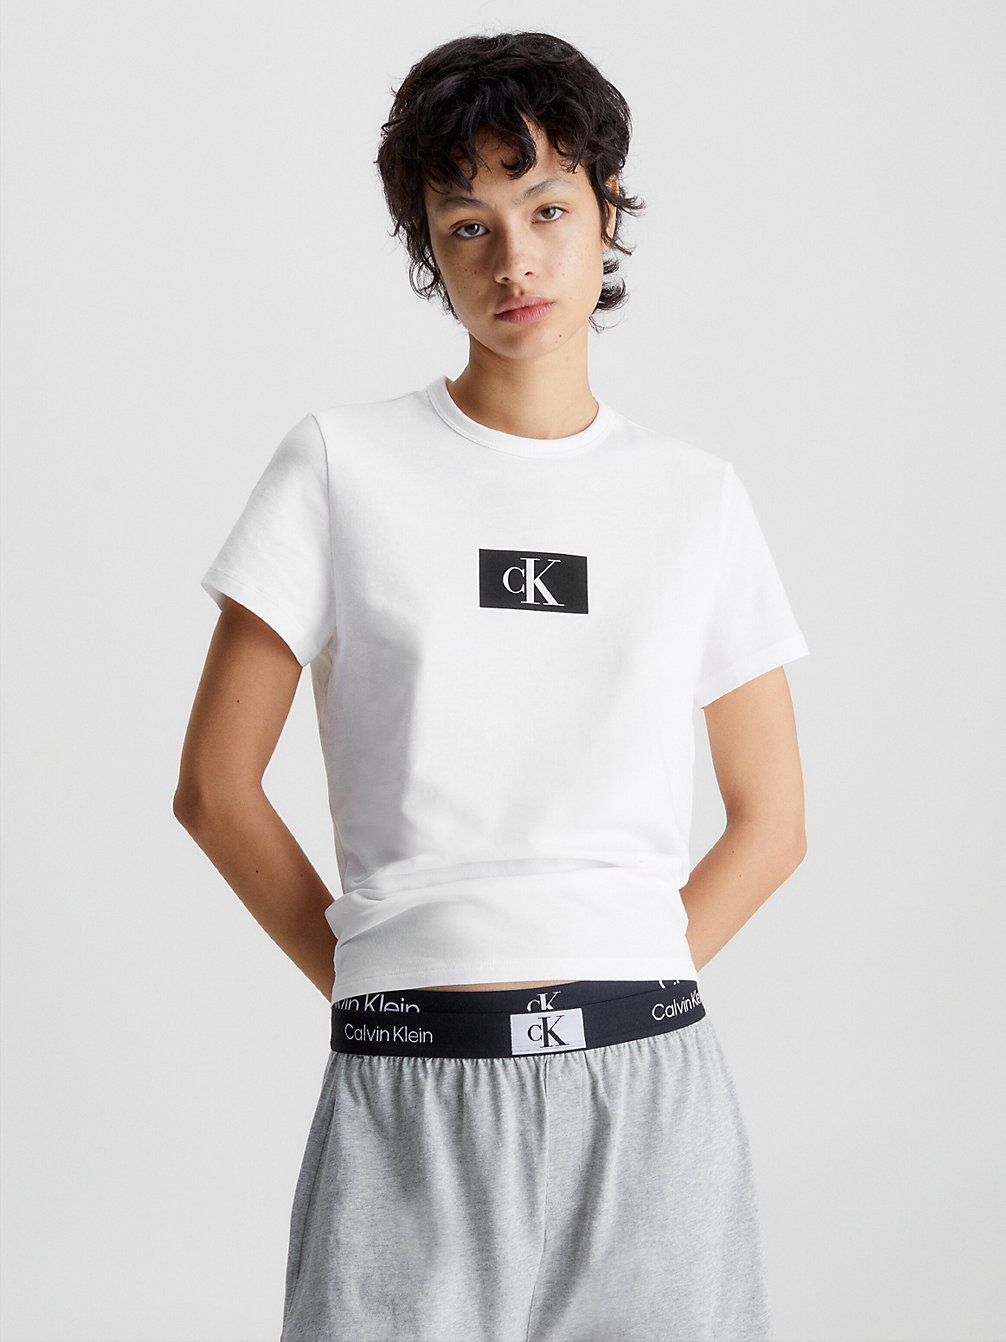 T-Shirt D’intérieur - Ck96 > WHITE > undefined femmes > Calvin Klein